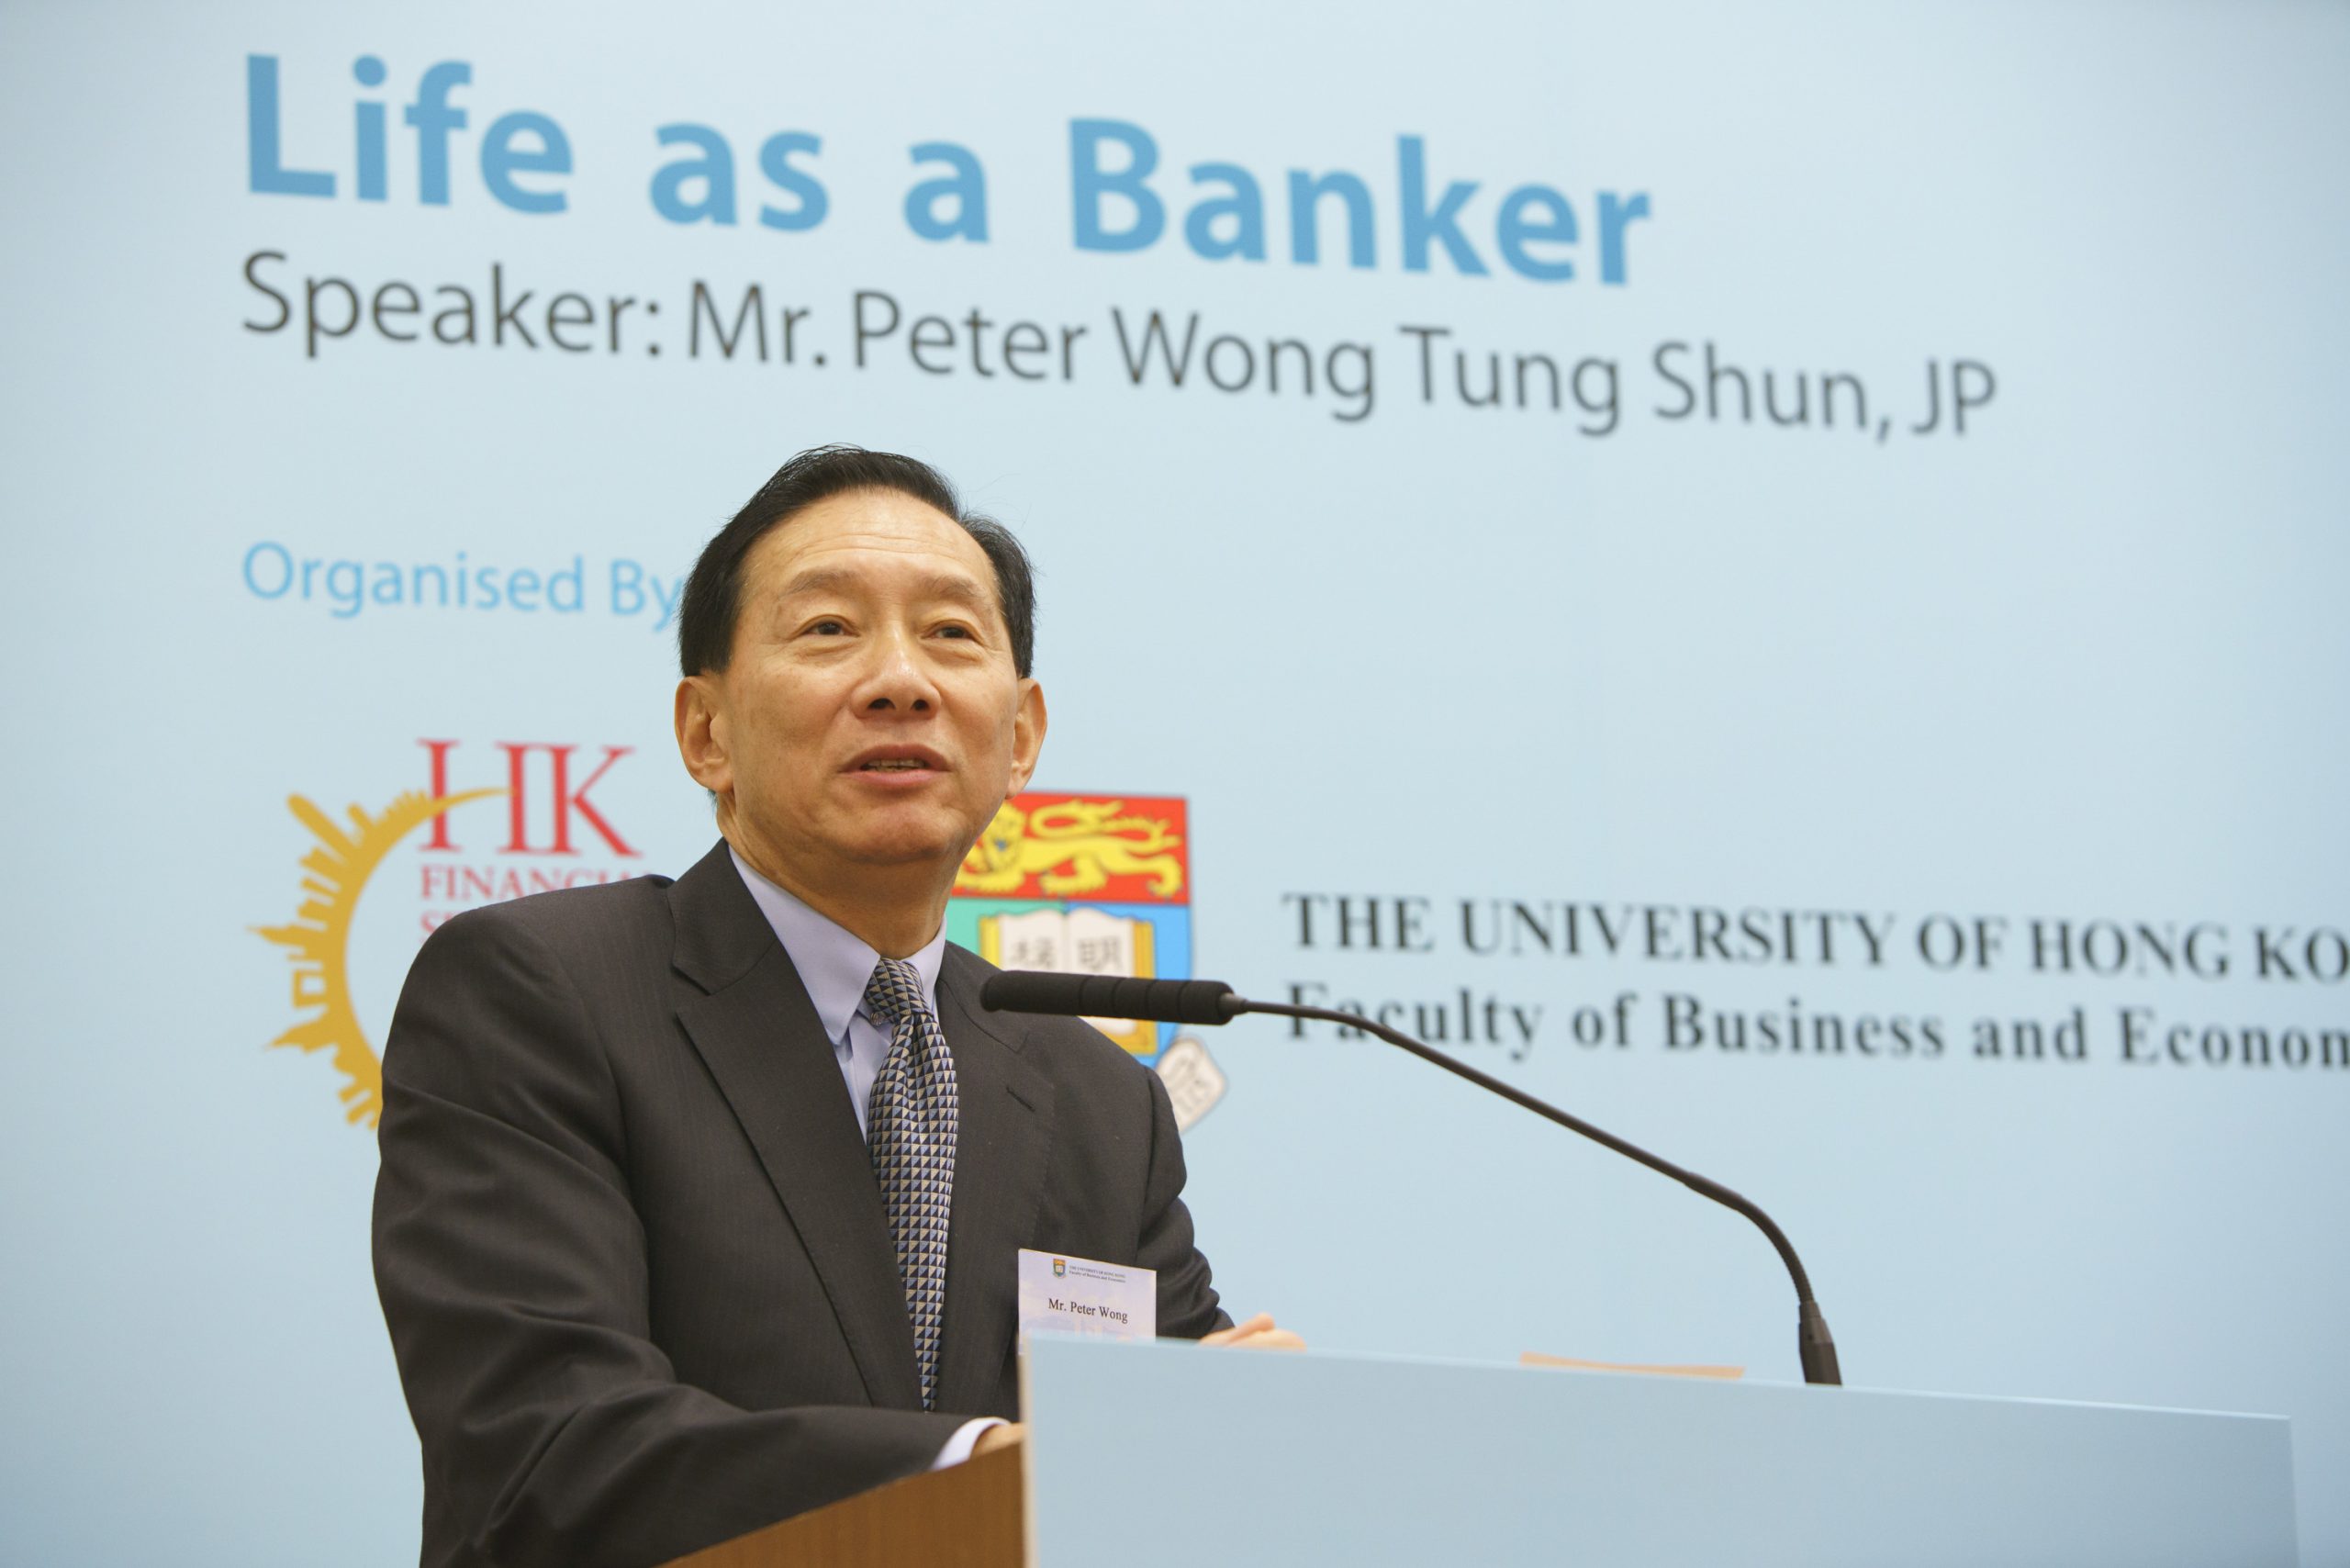 Mr. Peter Wong Tung Shun delivers speech entitled “Life as a Banker” at the Convocation Room, HKU. 王冬勝先生在香港大學畢業生議會廳以「銀行家之路」為題進行演講。